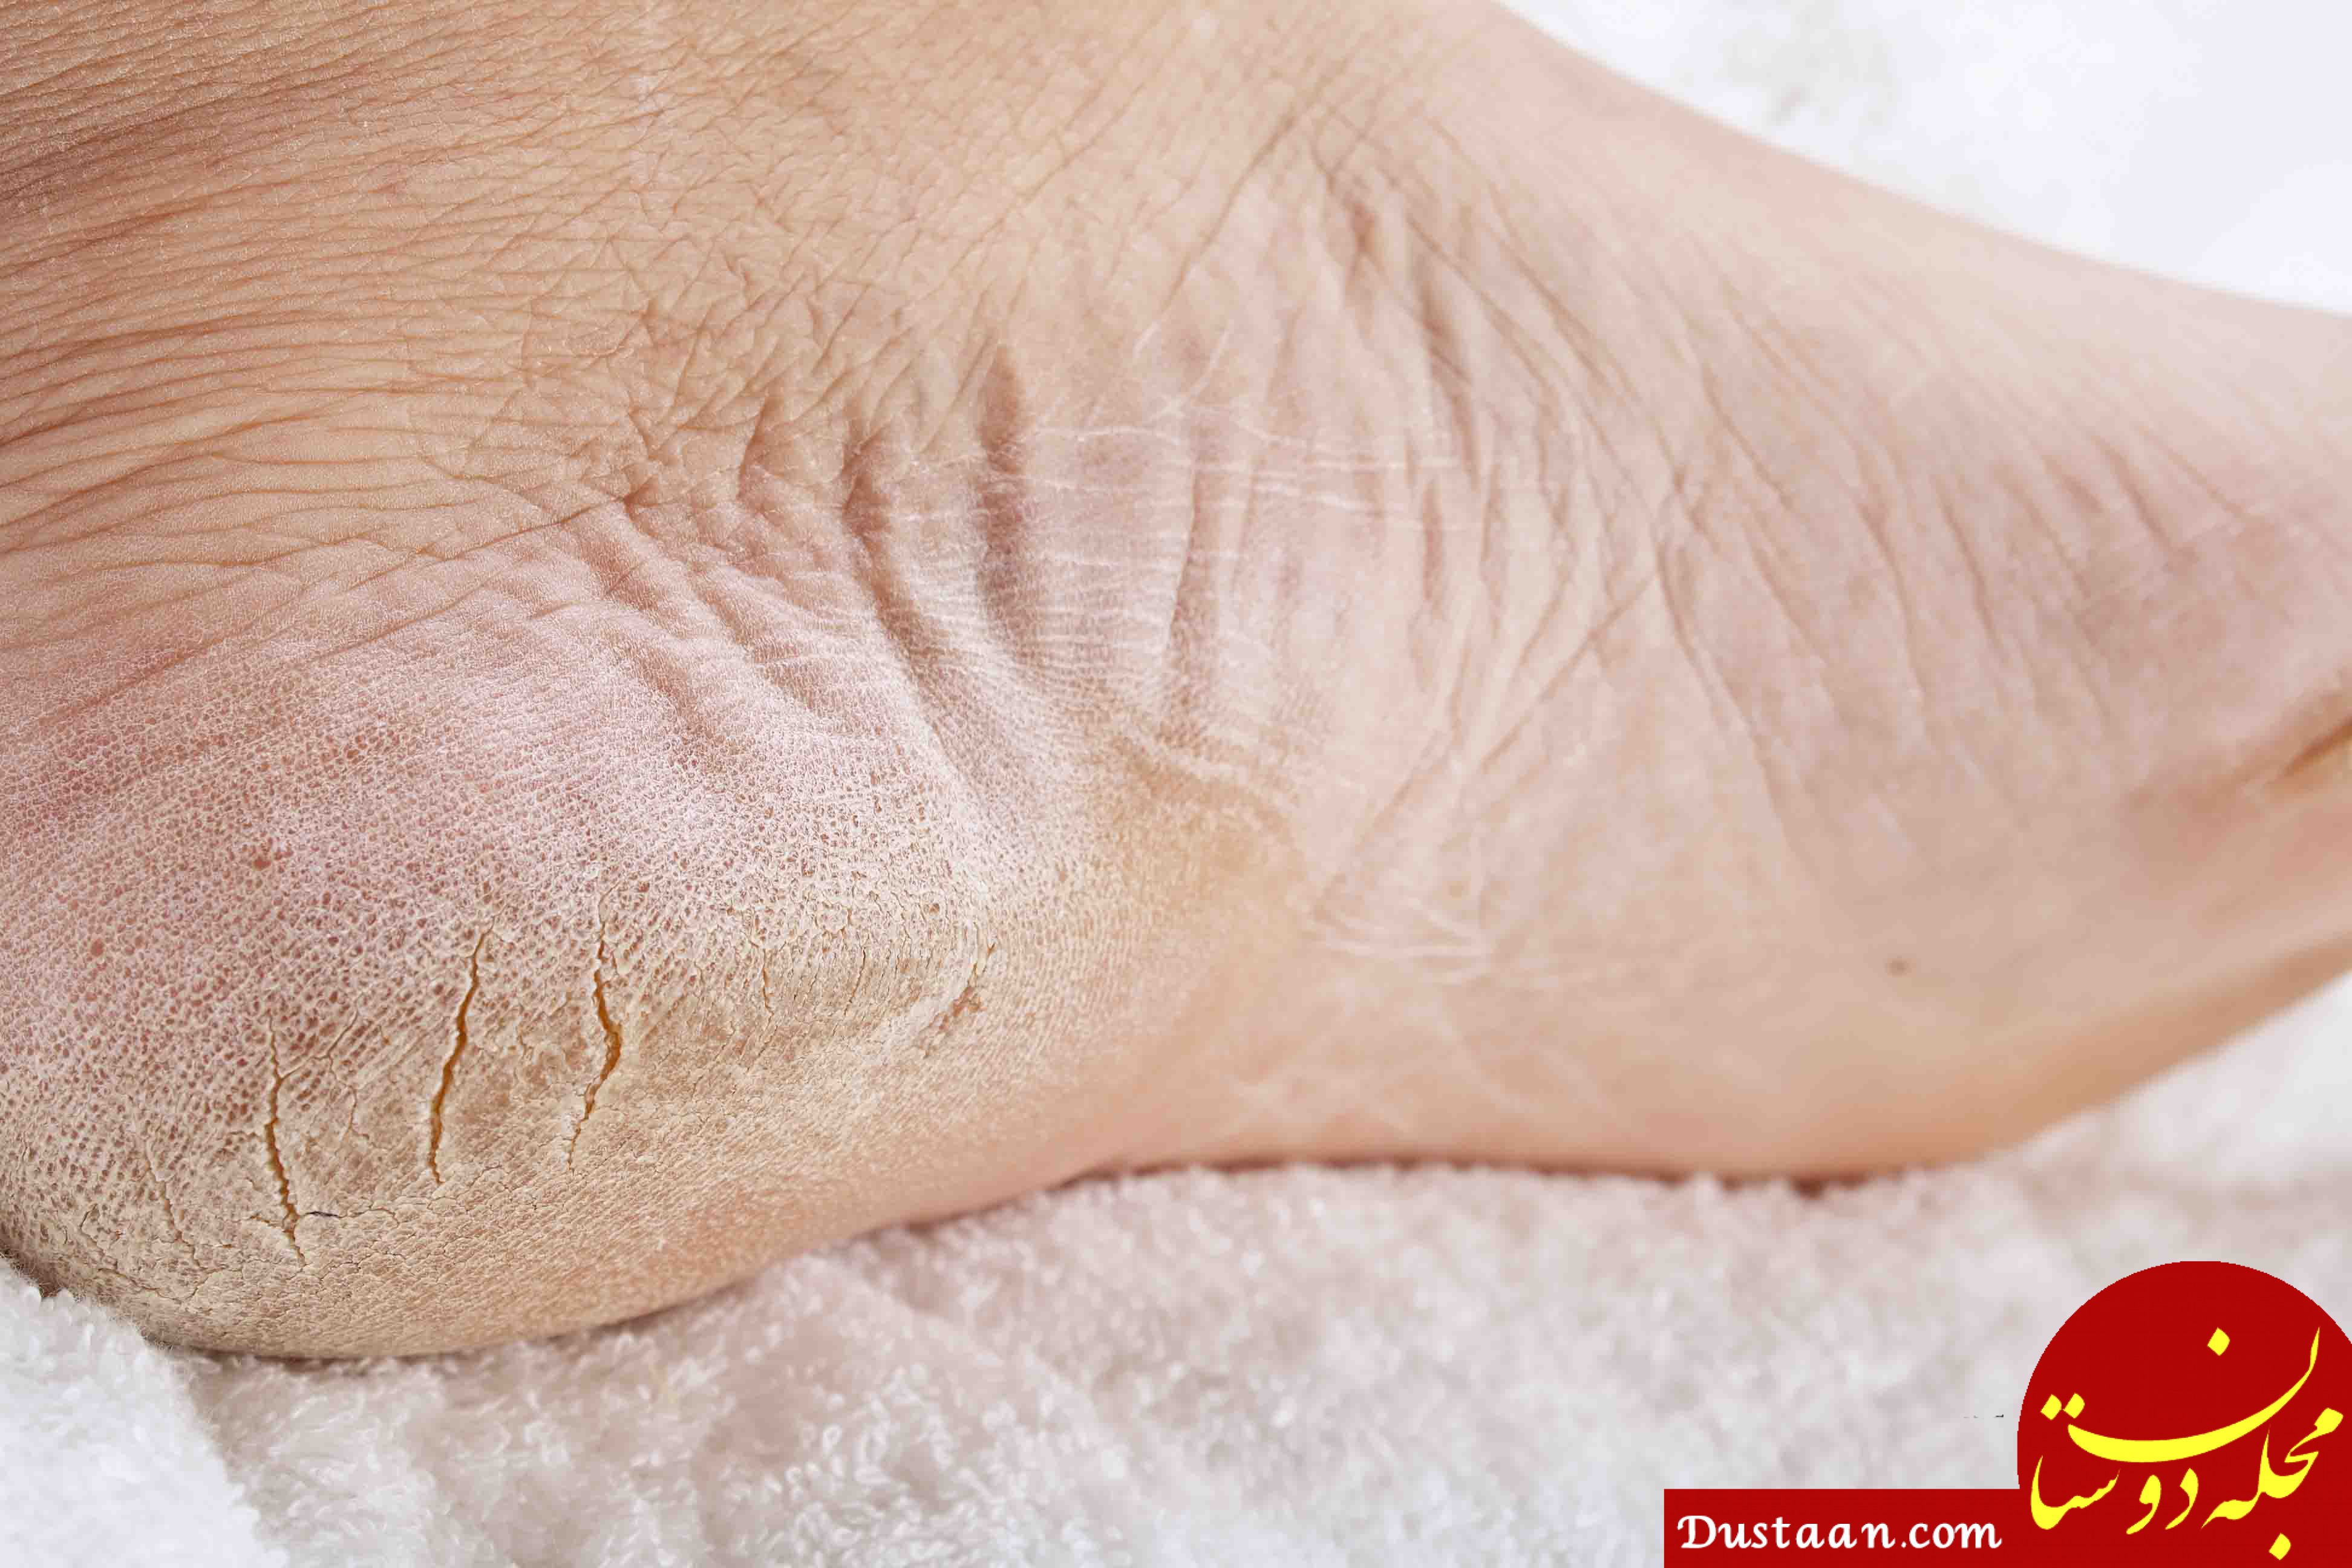 www.dustaan.com-درمان خانگی ترک پاشنه پا و ریش ریش شدن آن با کمک طب سنتی